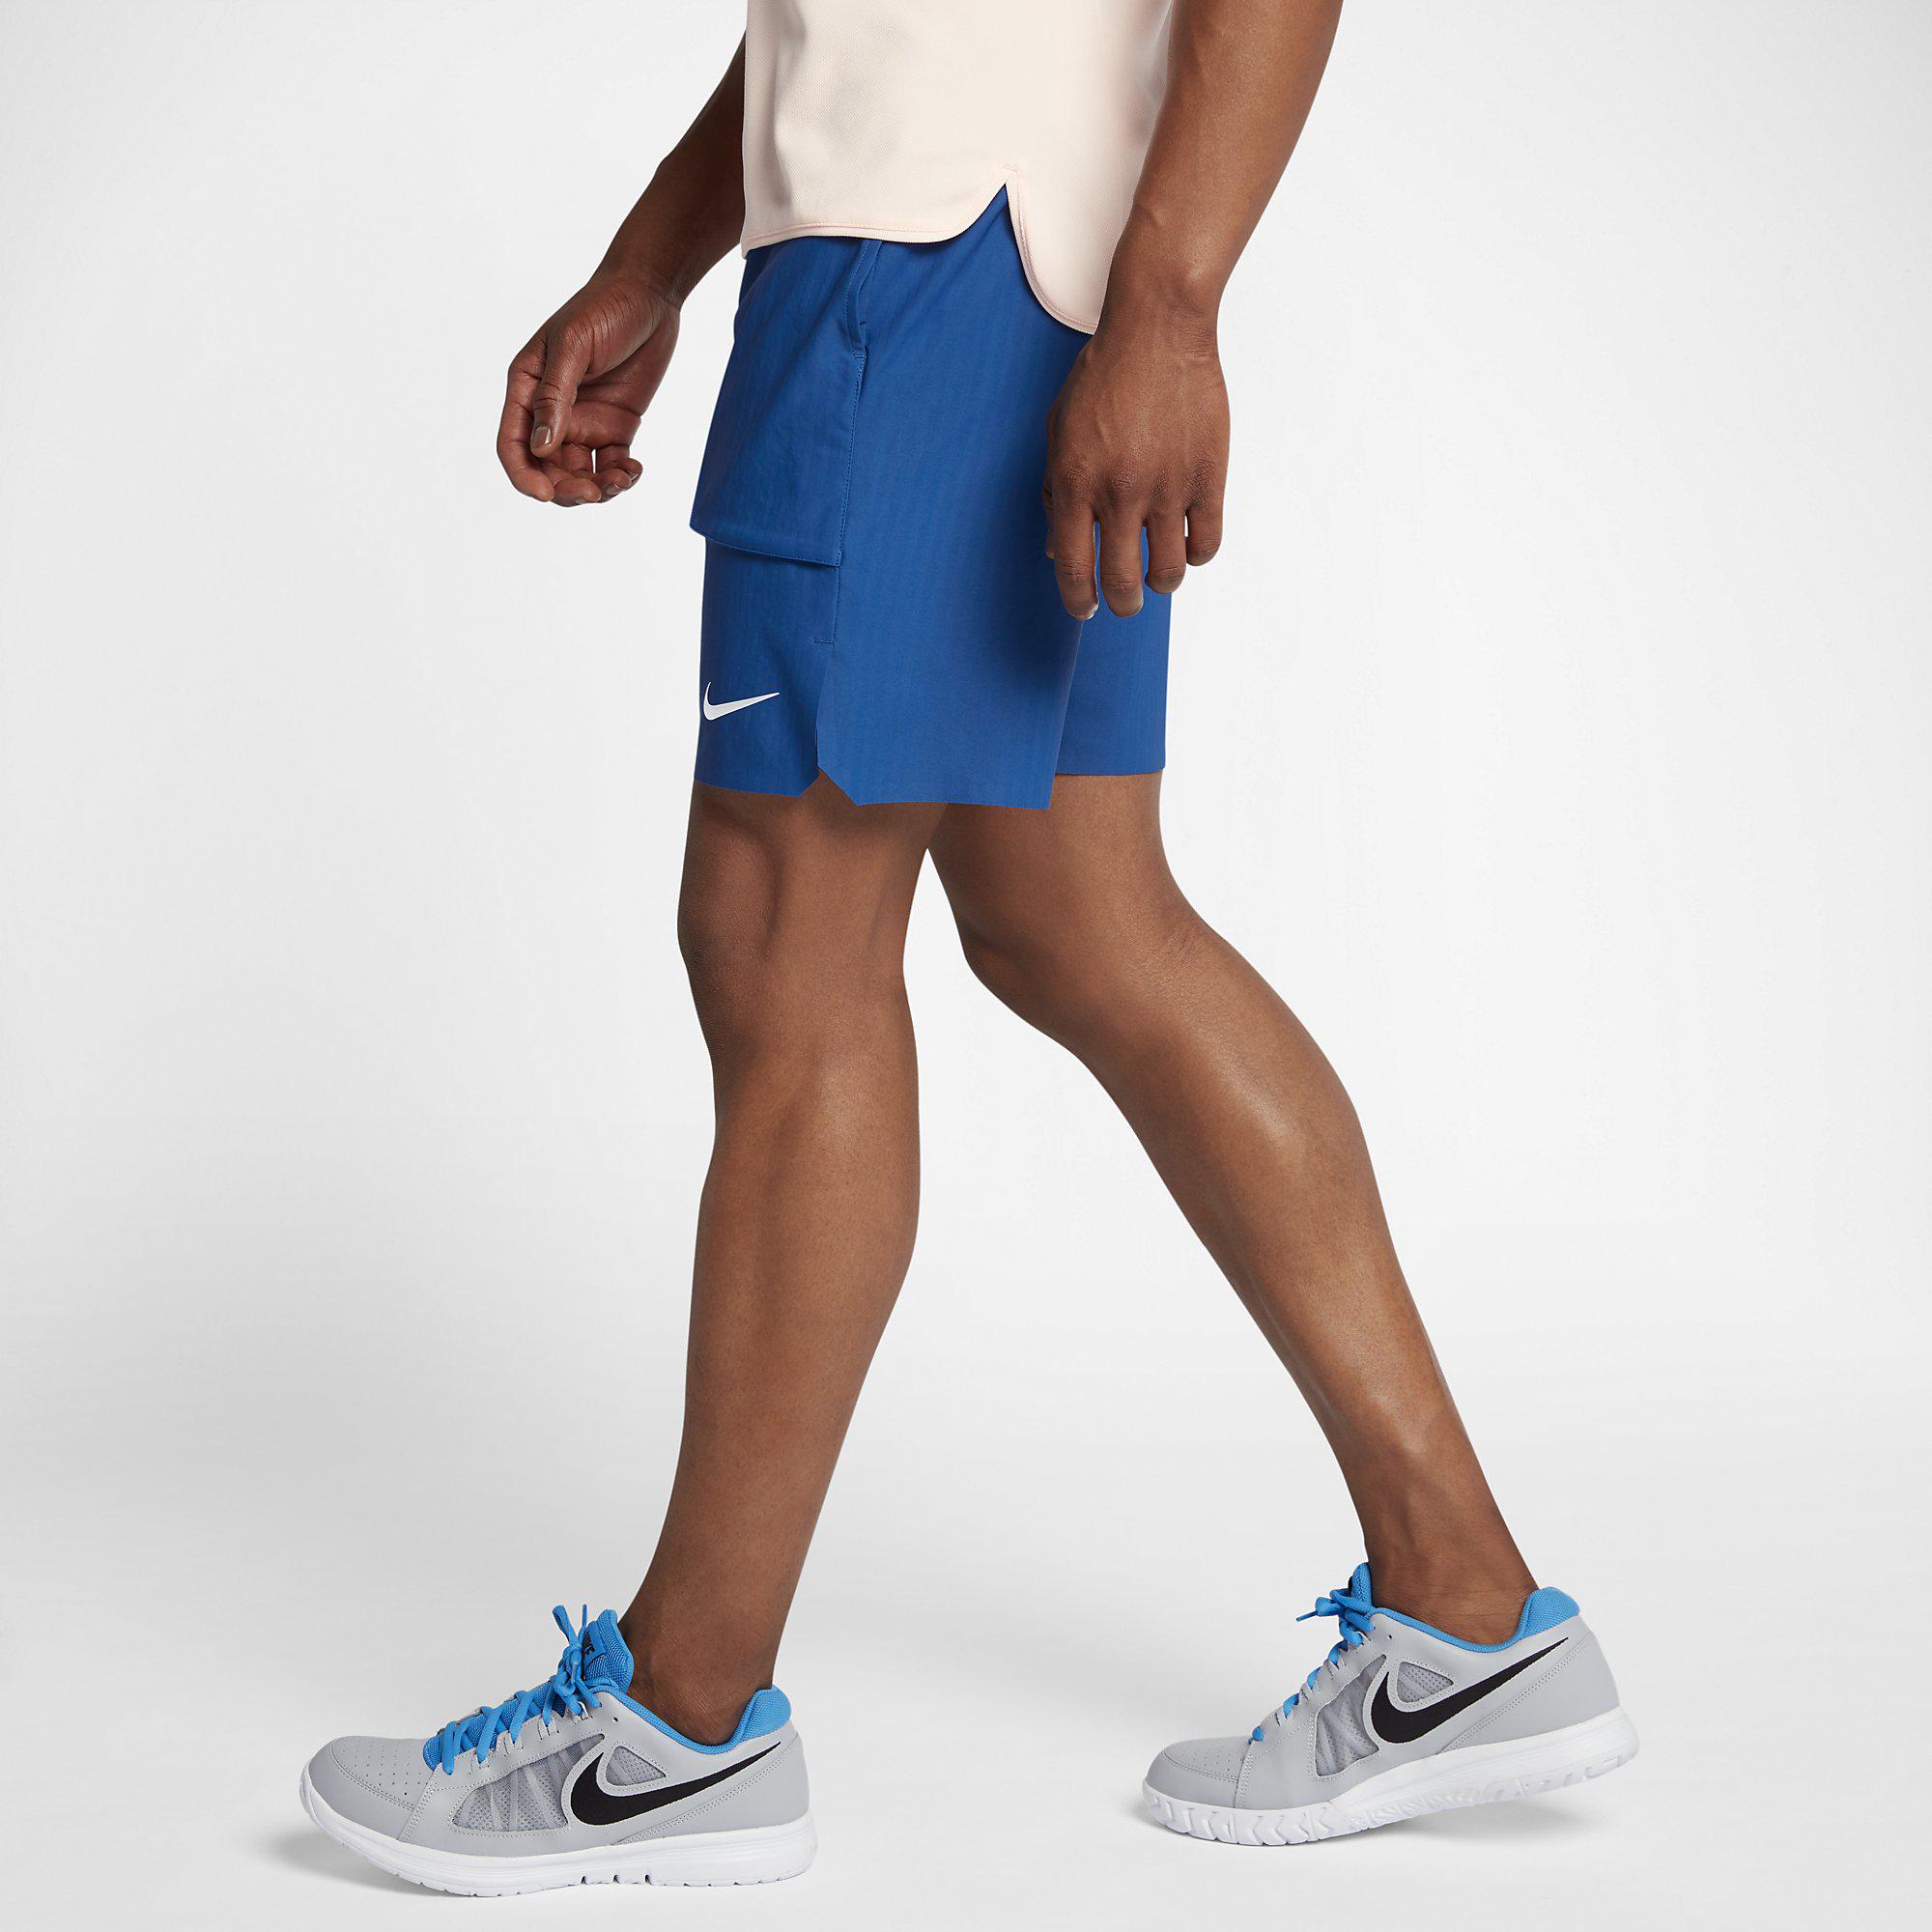 Nike Mens Flex 9 Inch Tennis Shorts - Blue Jay - Tennisnuts.com